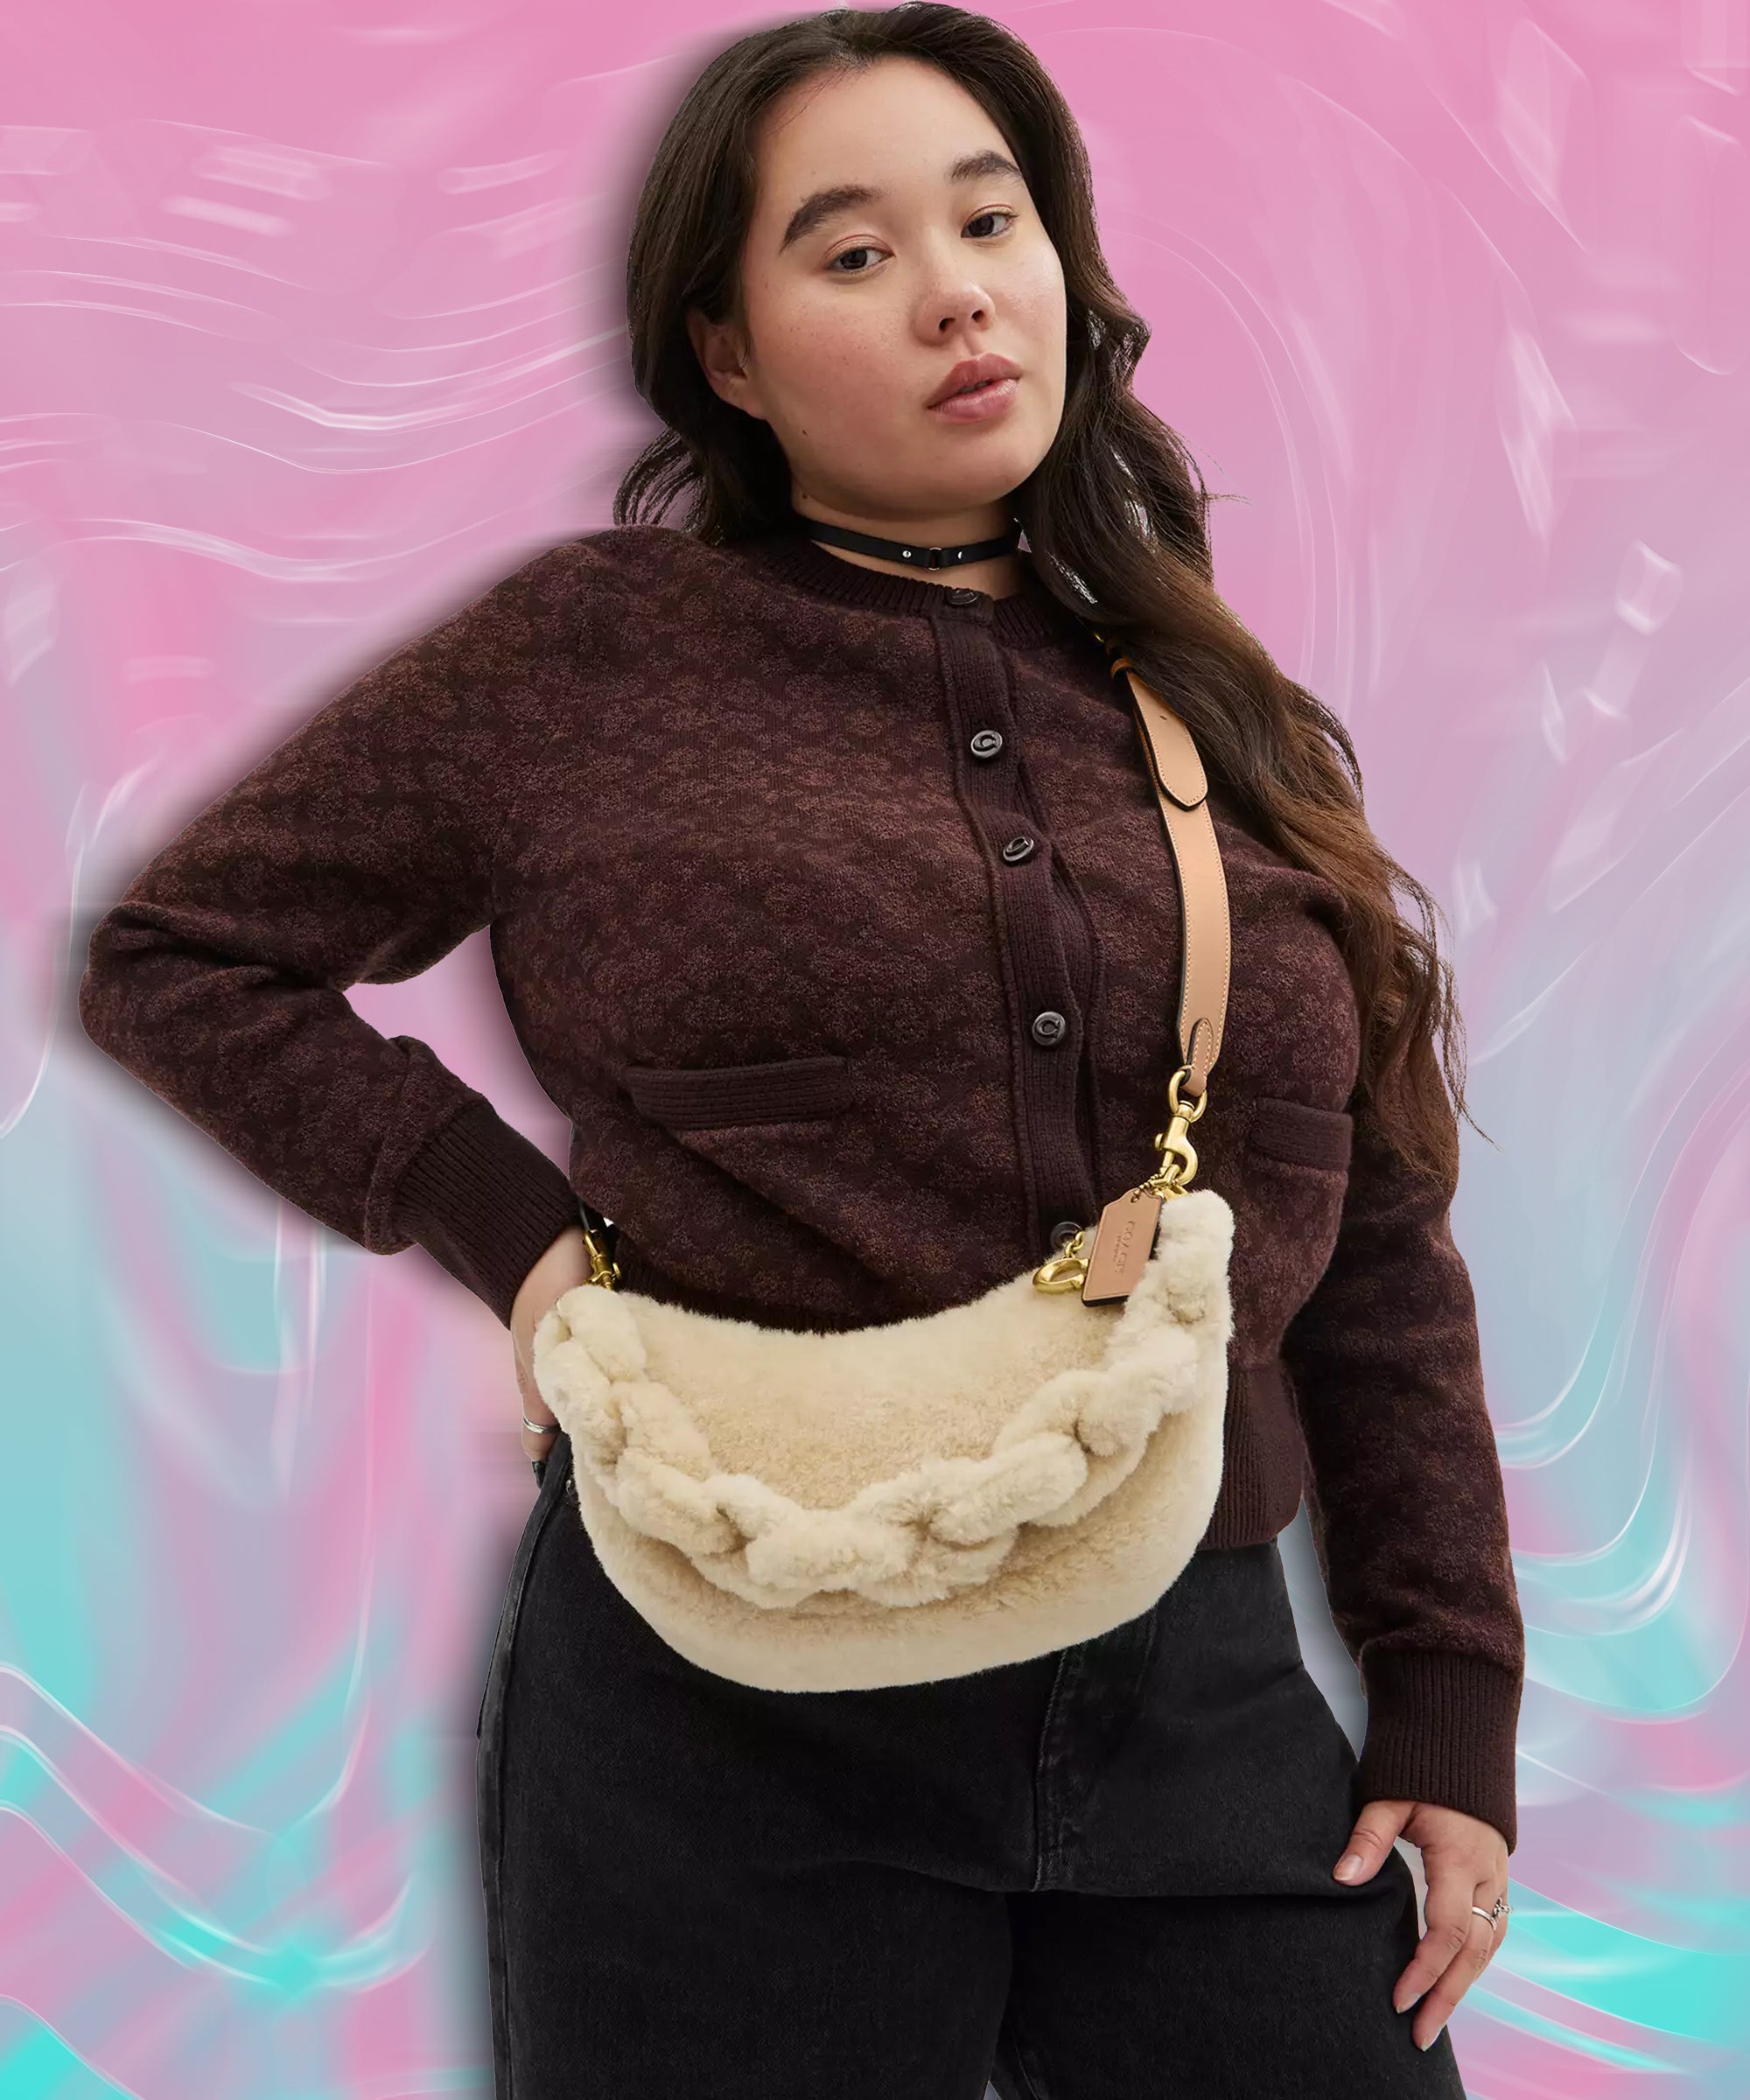 Buy TENDYCOCO Shoulder Bag Faux Fur Purse Heart Shaped Purse Furry Clutch  Fluffy Handbag for Women at Amazon.in